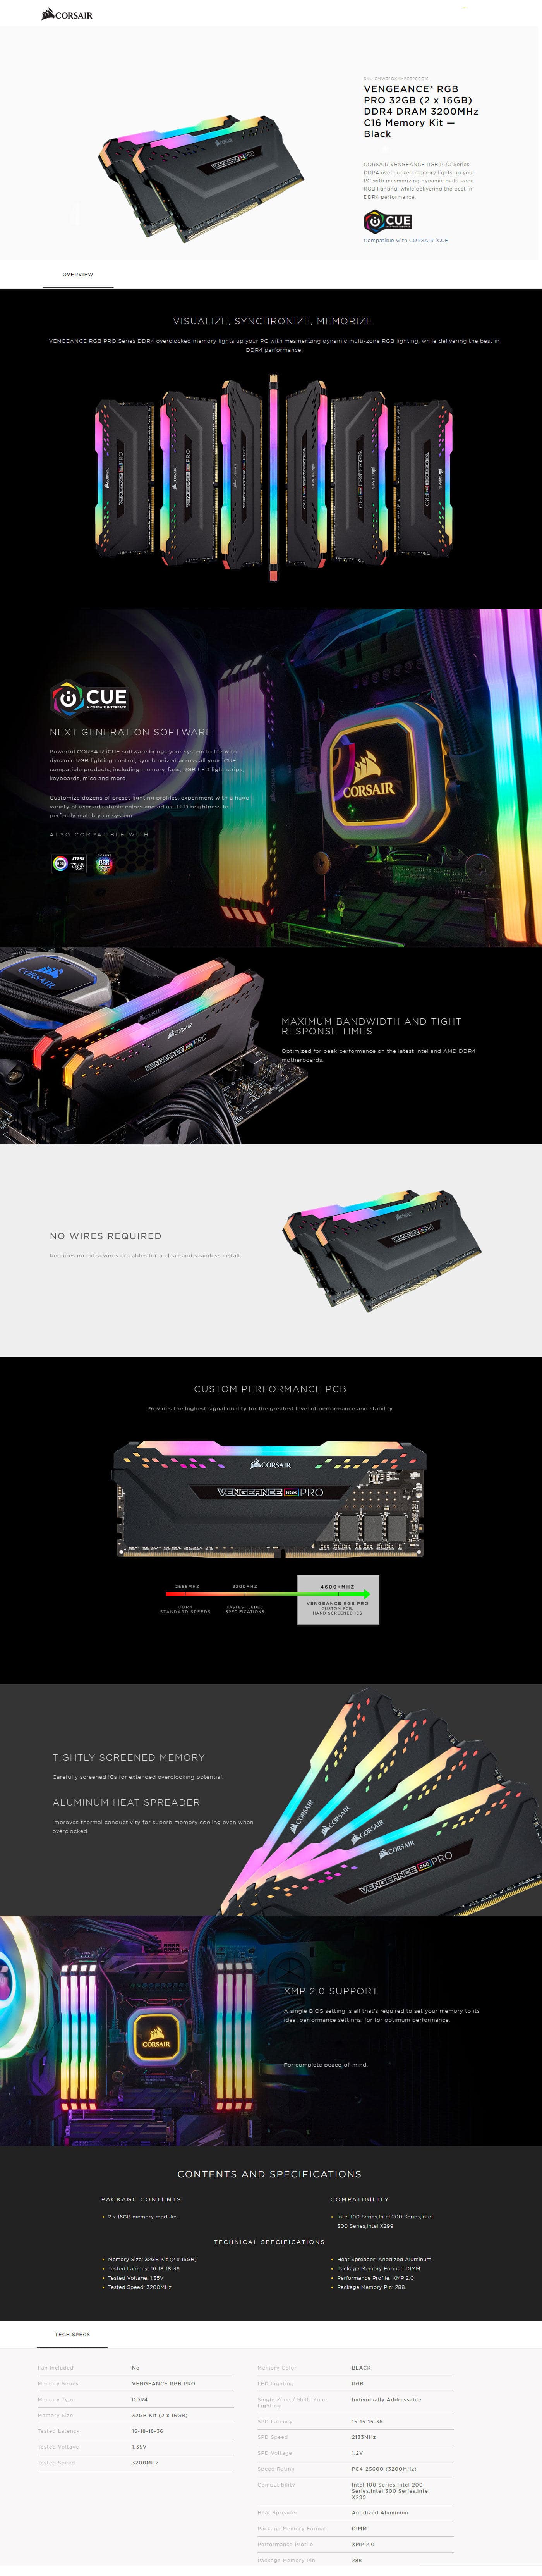  Buy Online Corsair Vengeance RGB PRO 32GB (2 x 16GB) DDR4 DRAM 3200MHz C16 Memory Kit - Black (CMW32GX4M2C3200C16)